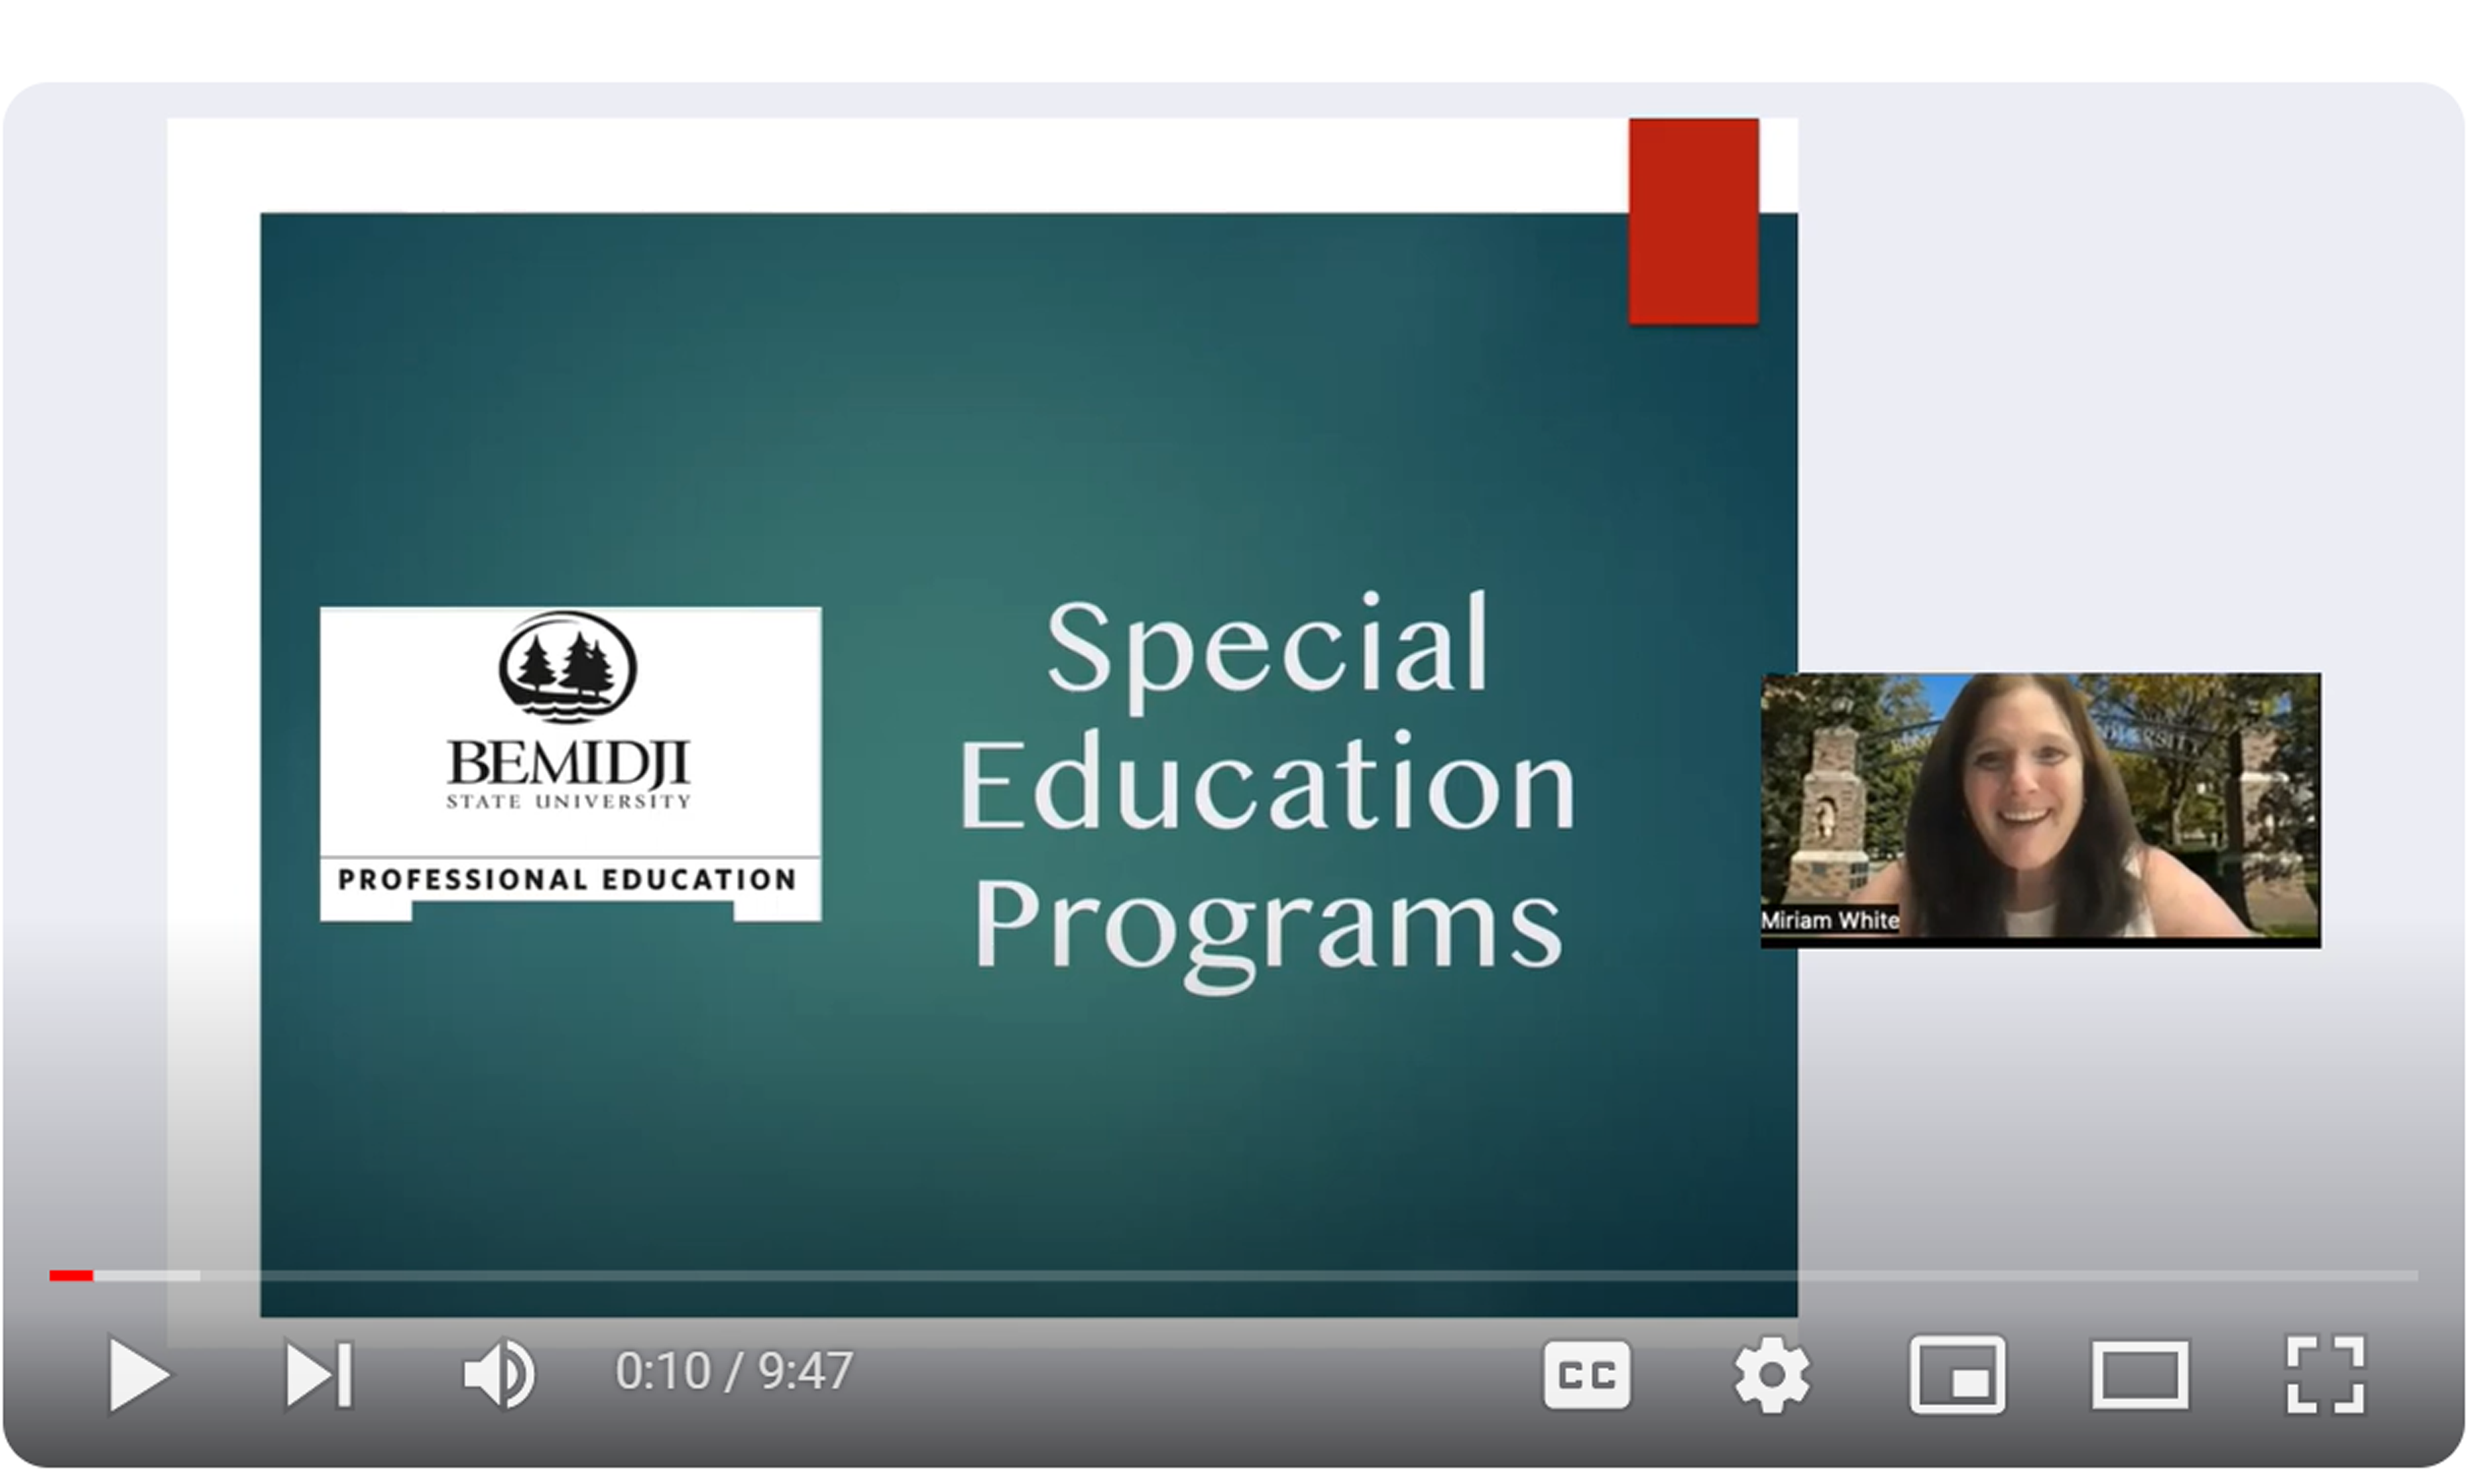 Special Education Programs at Bemidji State University, video